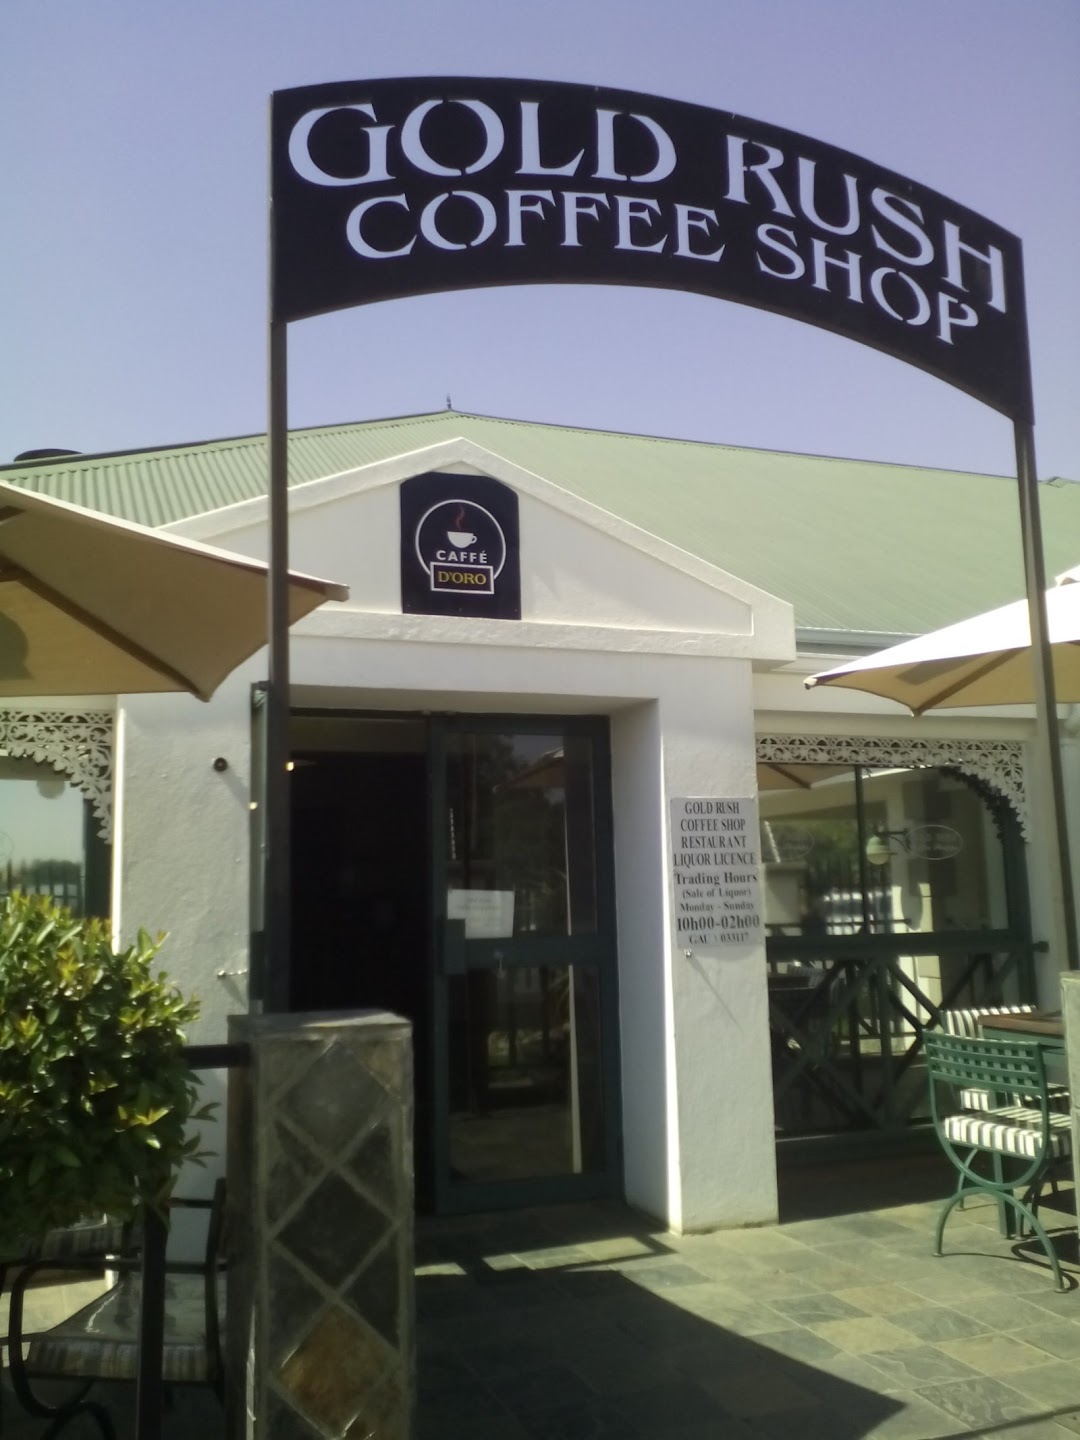 Gold Rush Coffee Shop